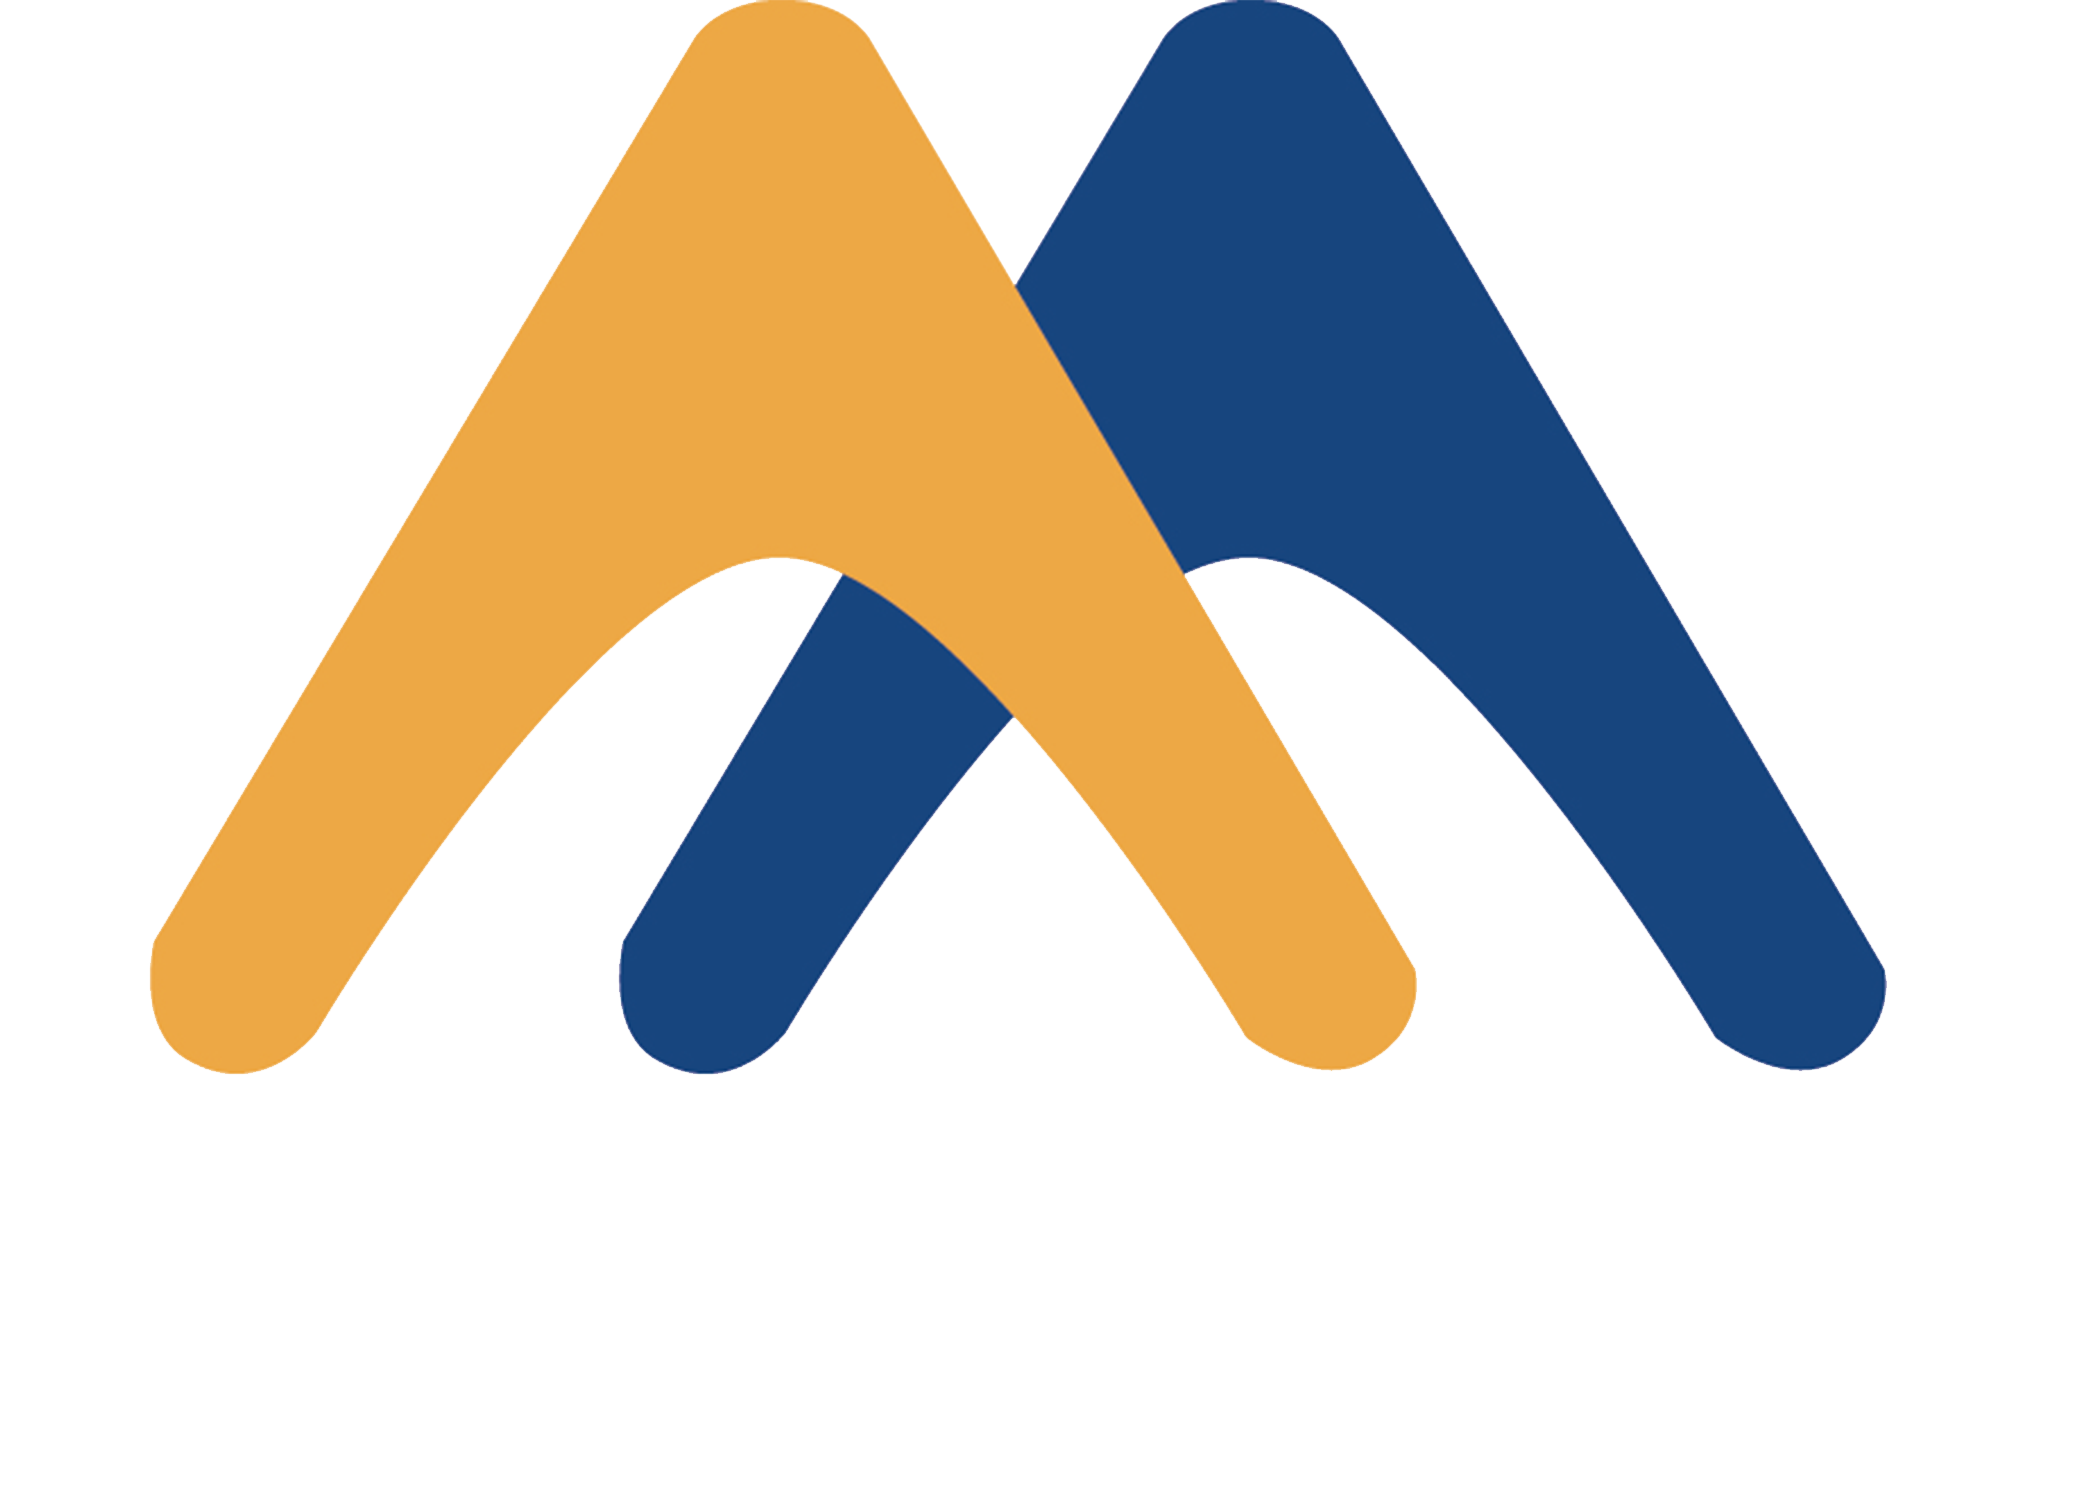 MEGATHEQUE